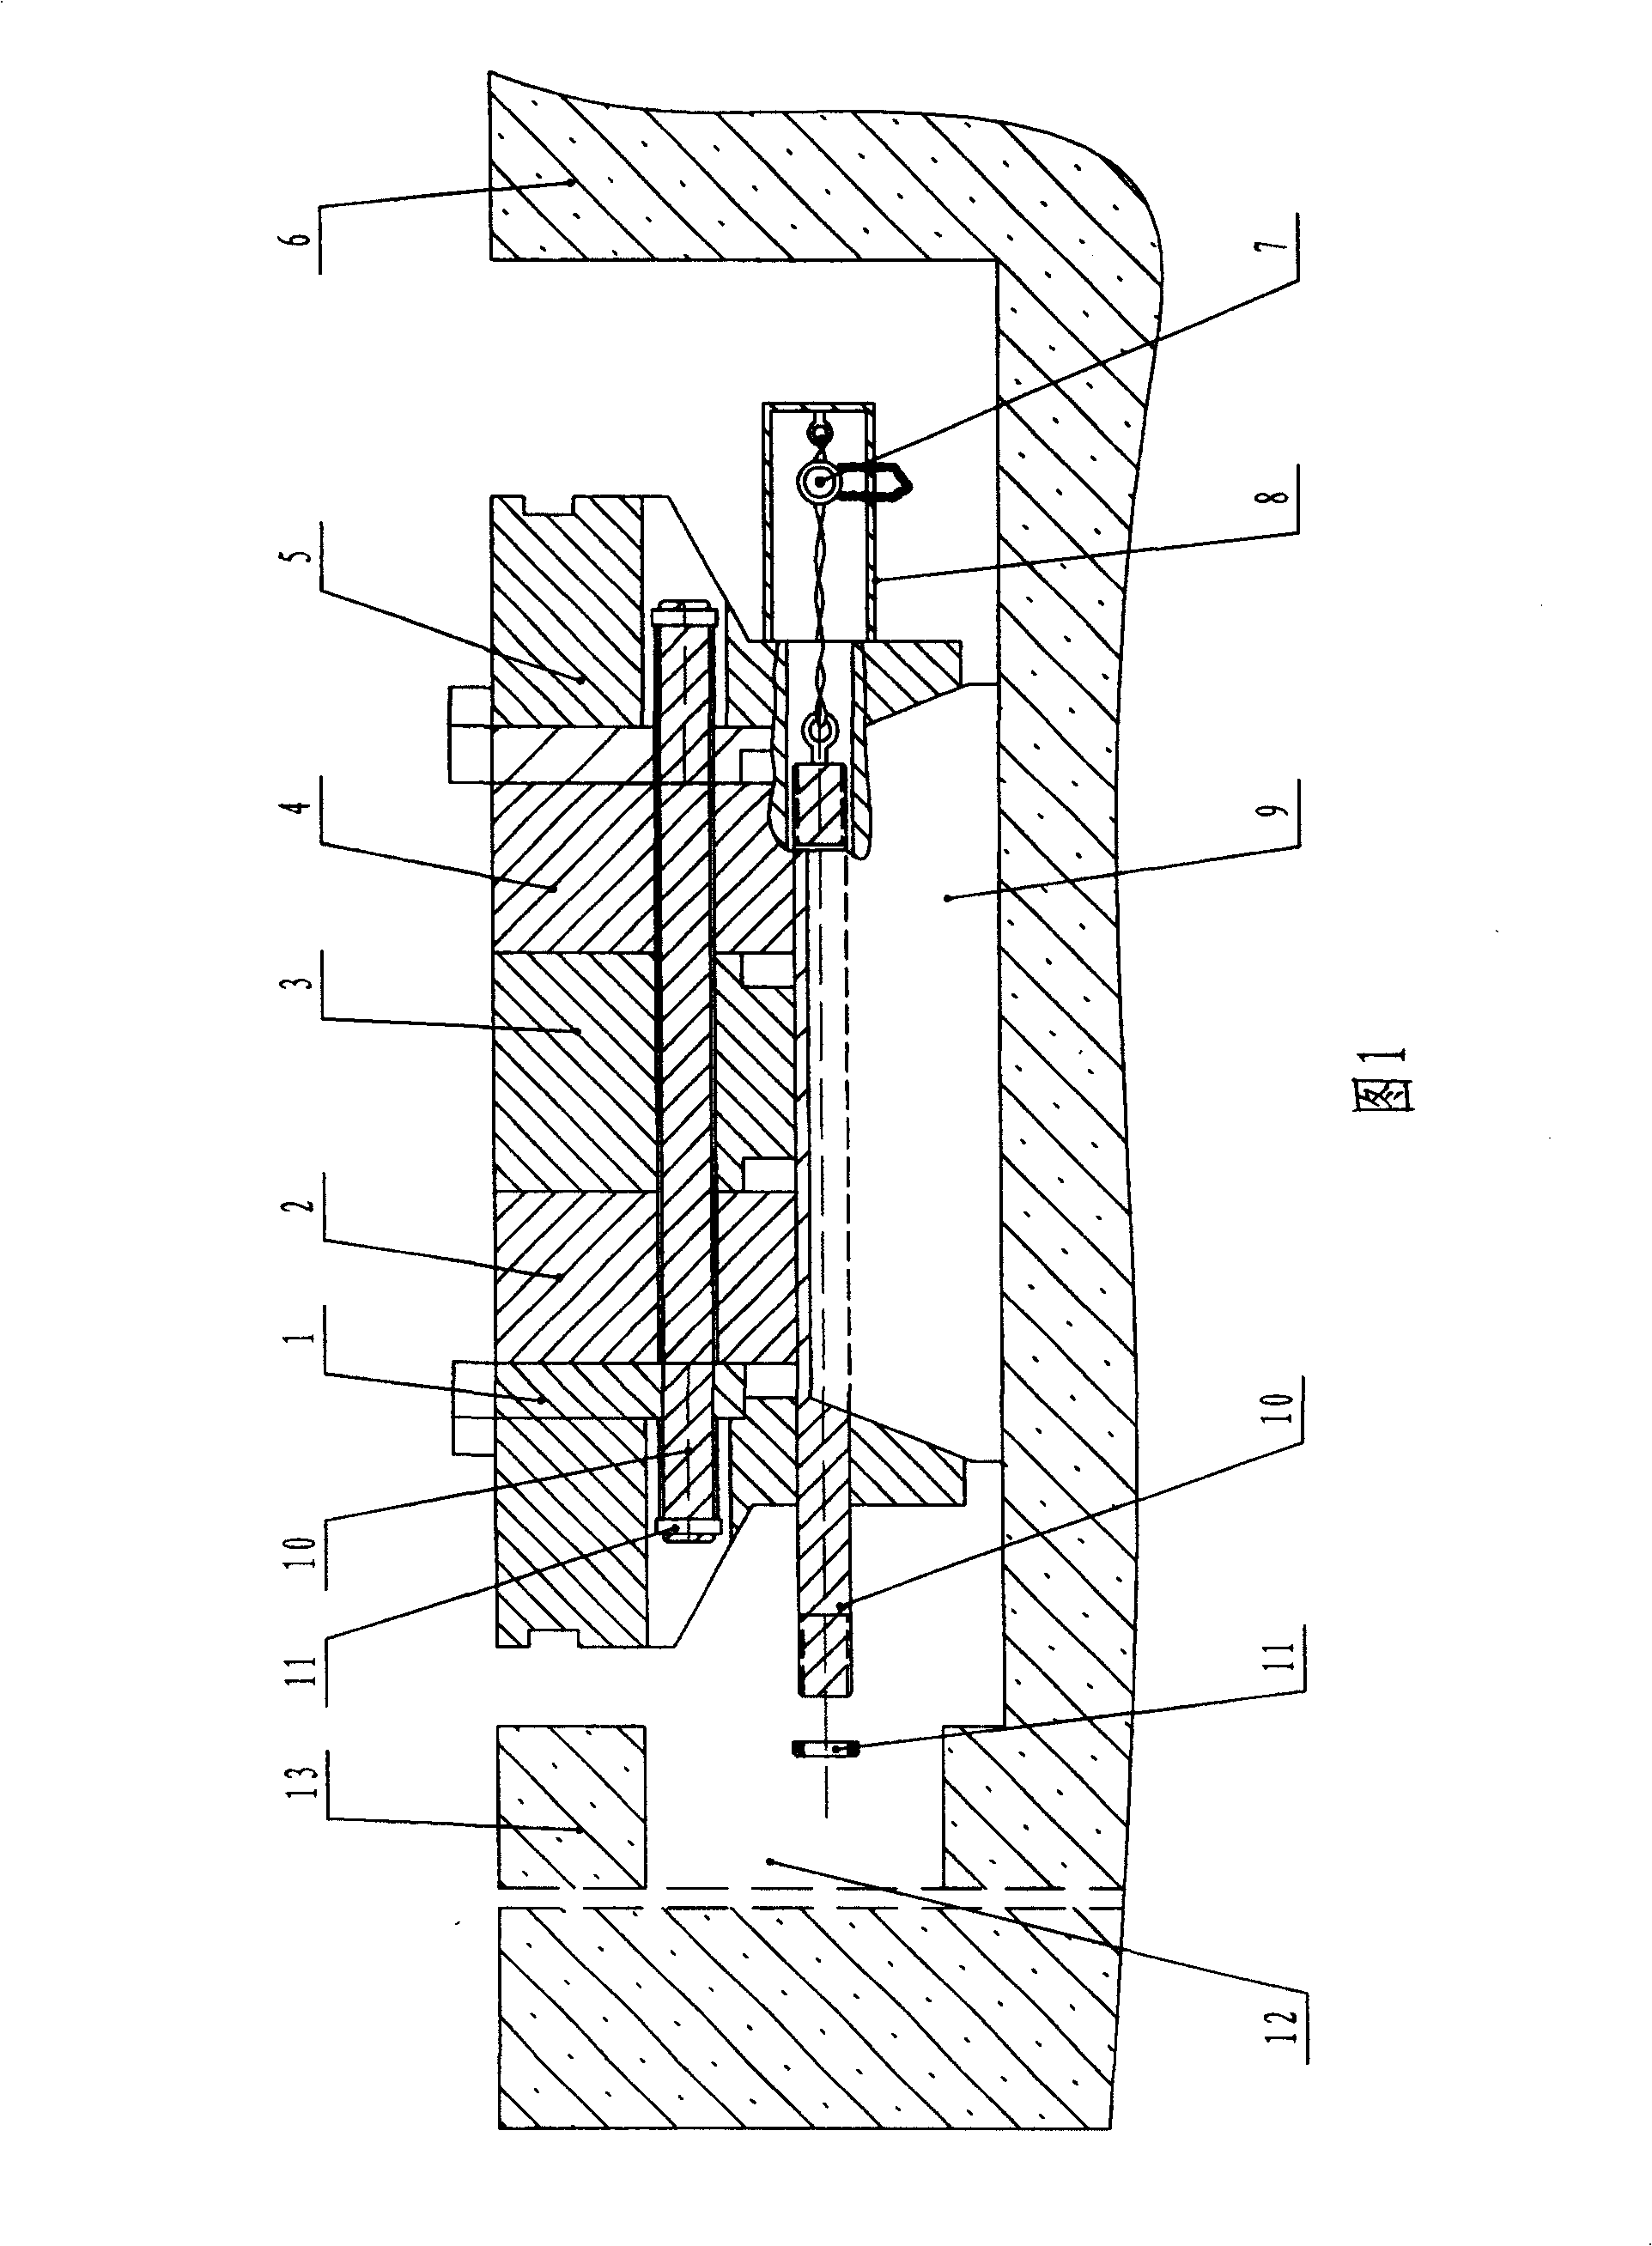 Mounting method of large pressure machine foundation